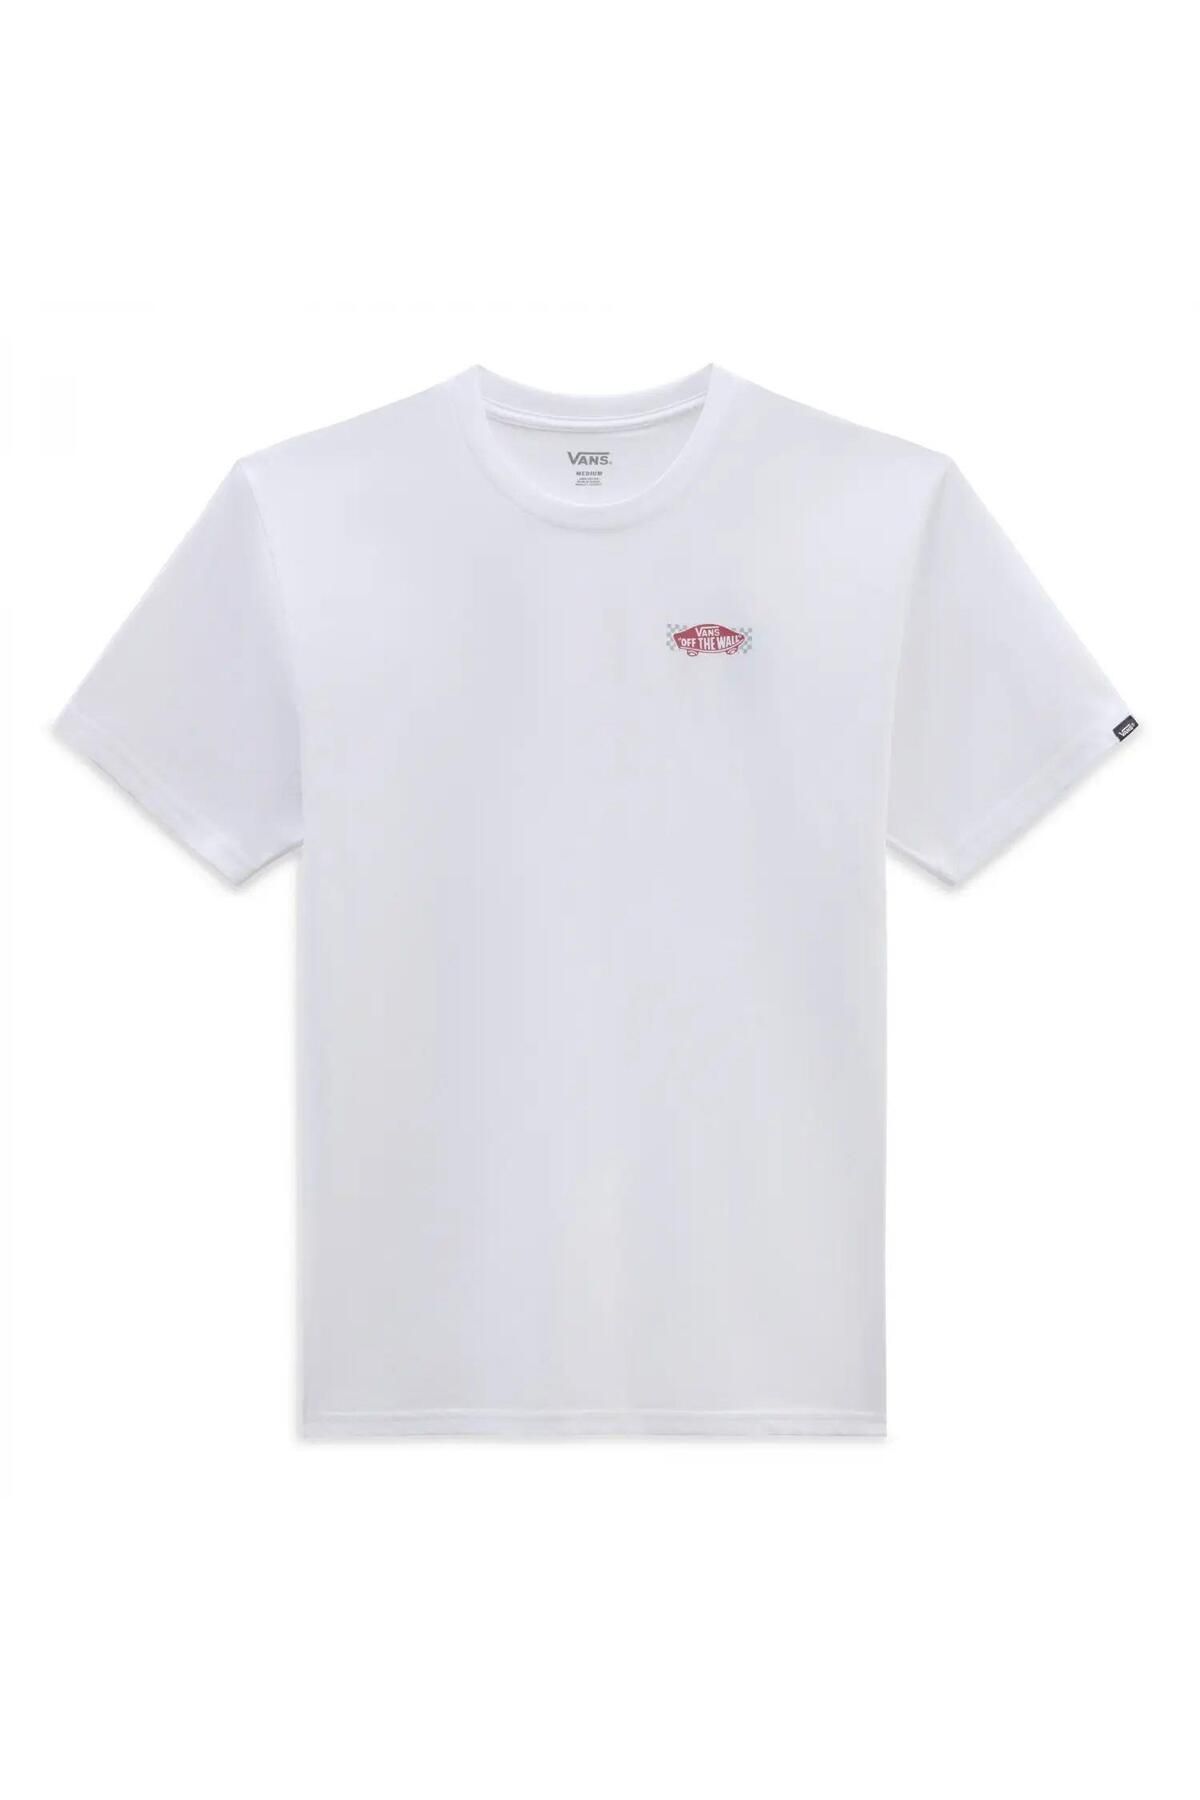 Vans WAYRACE TEE-B Erkek T-Shirt VN000FKMWHT1 Beyaz-XL